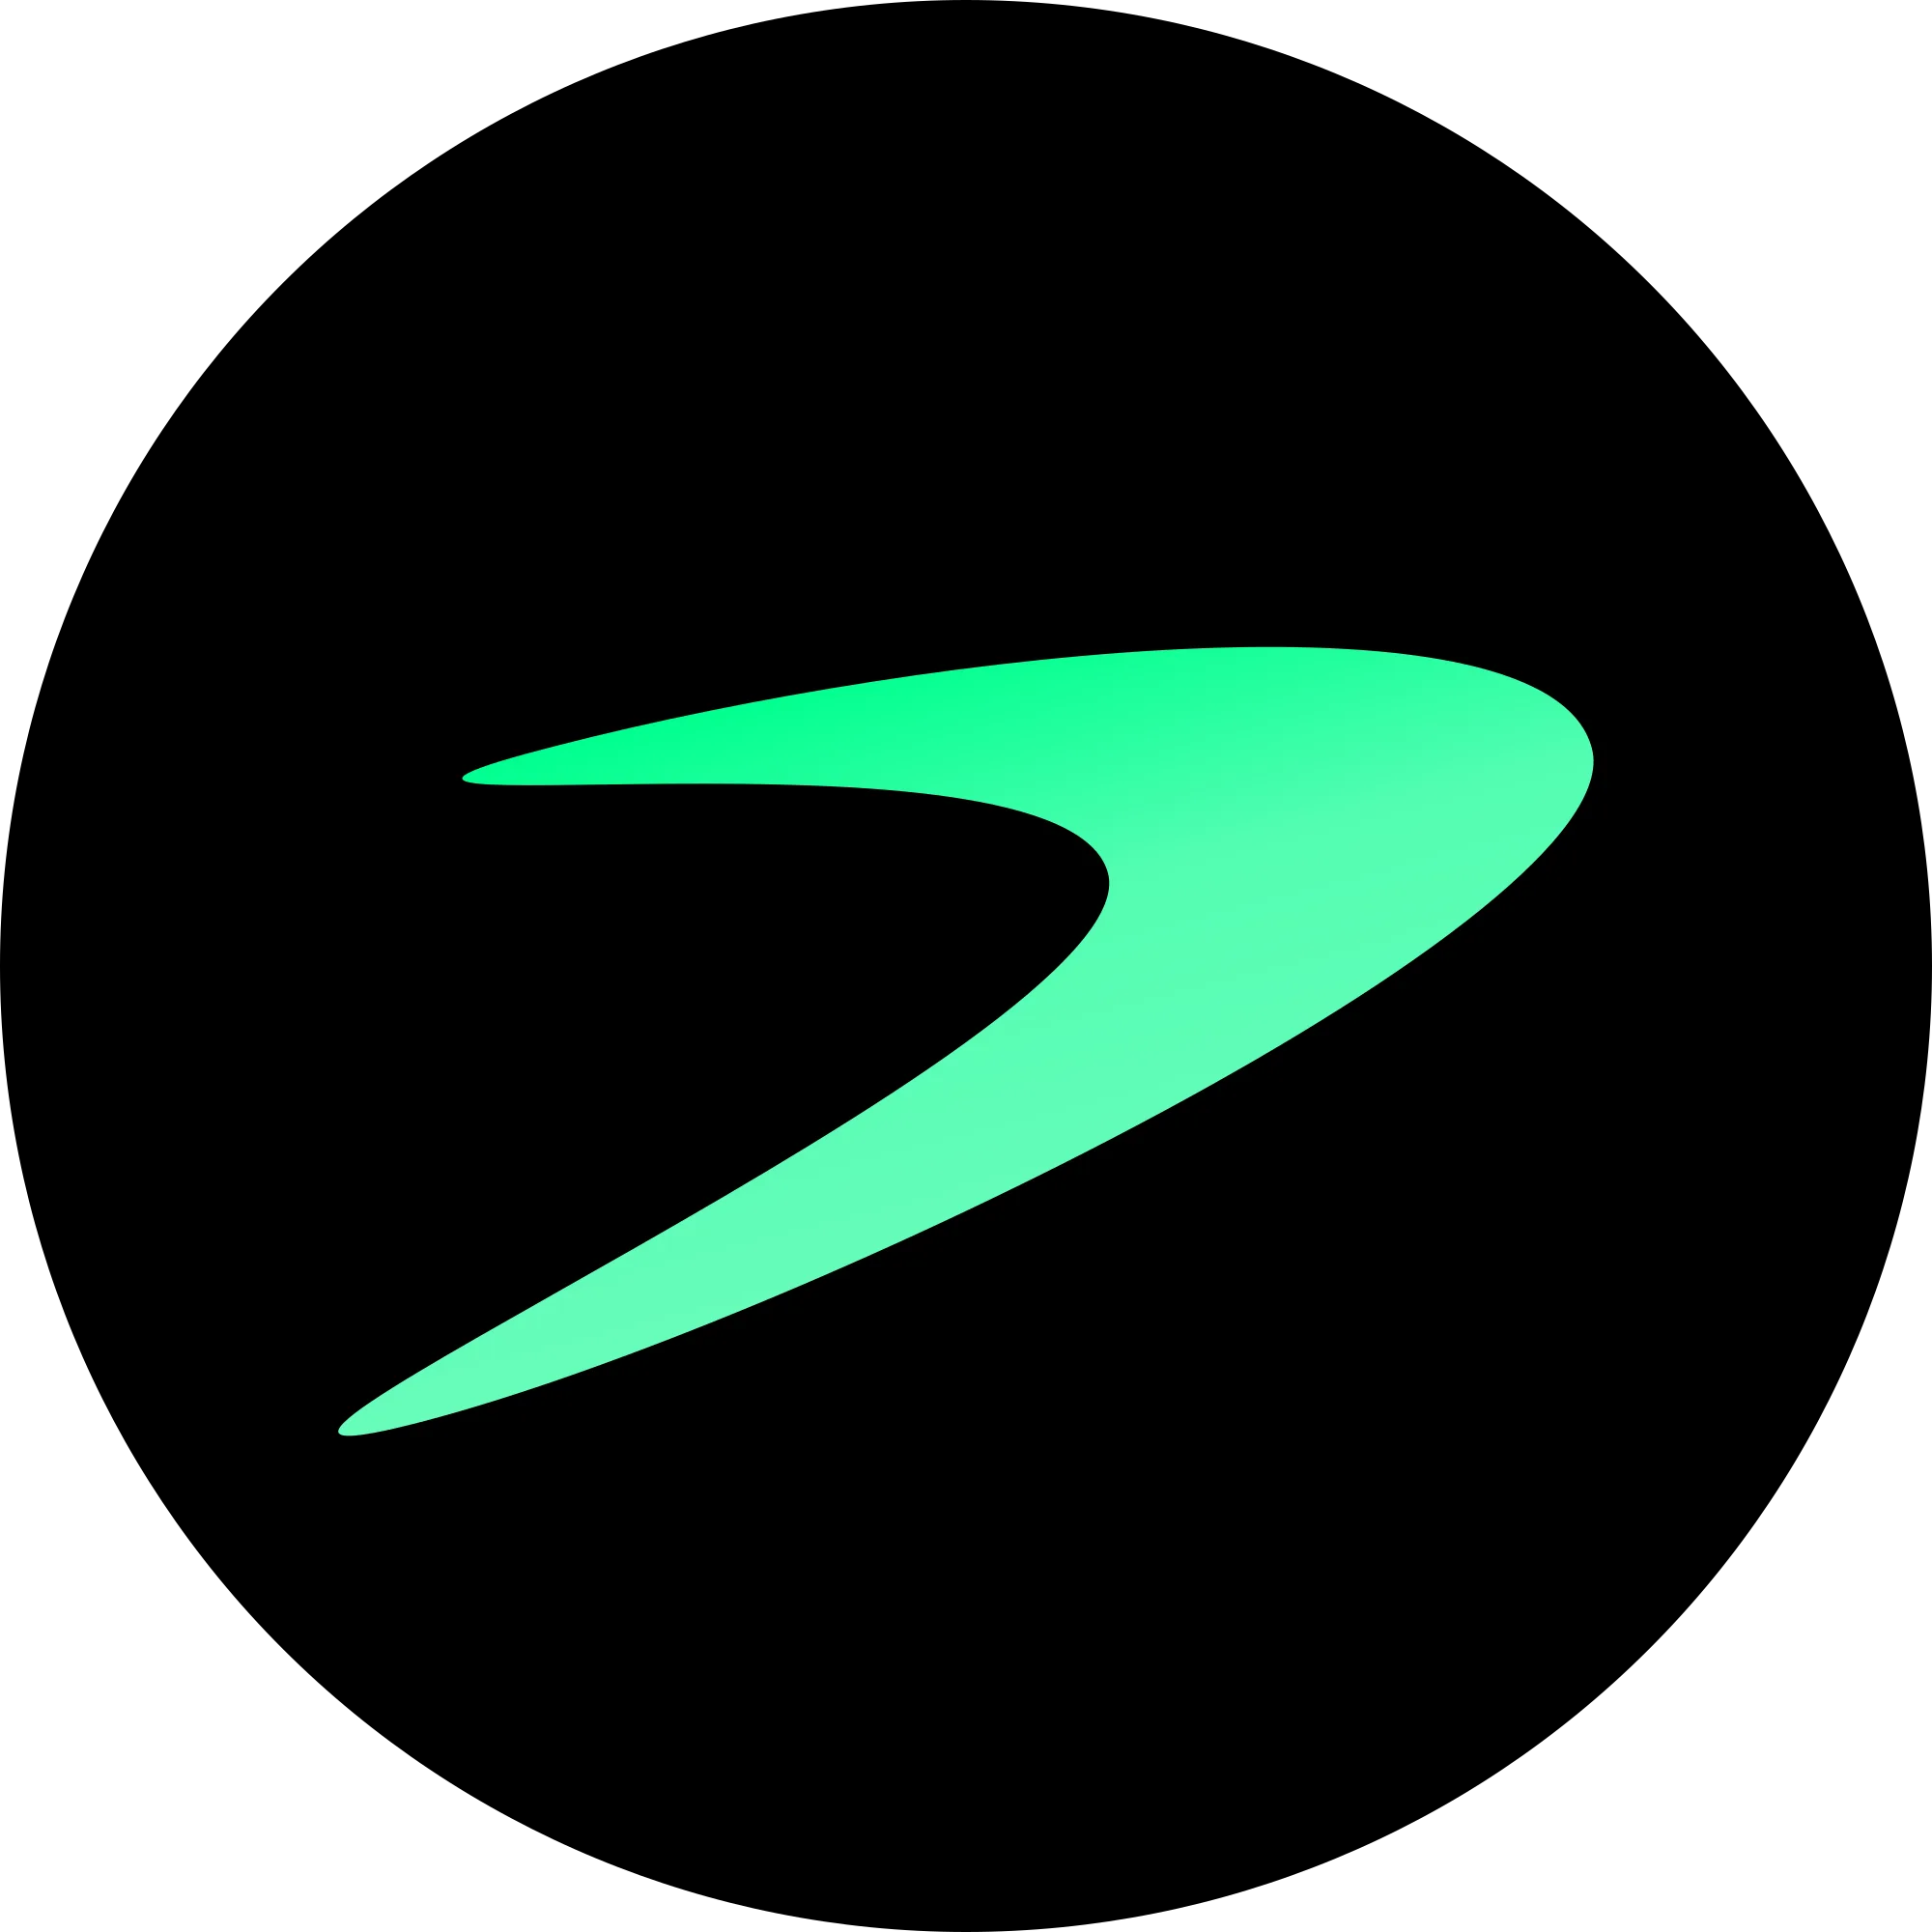 Tellor logo in png format